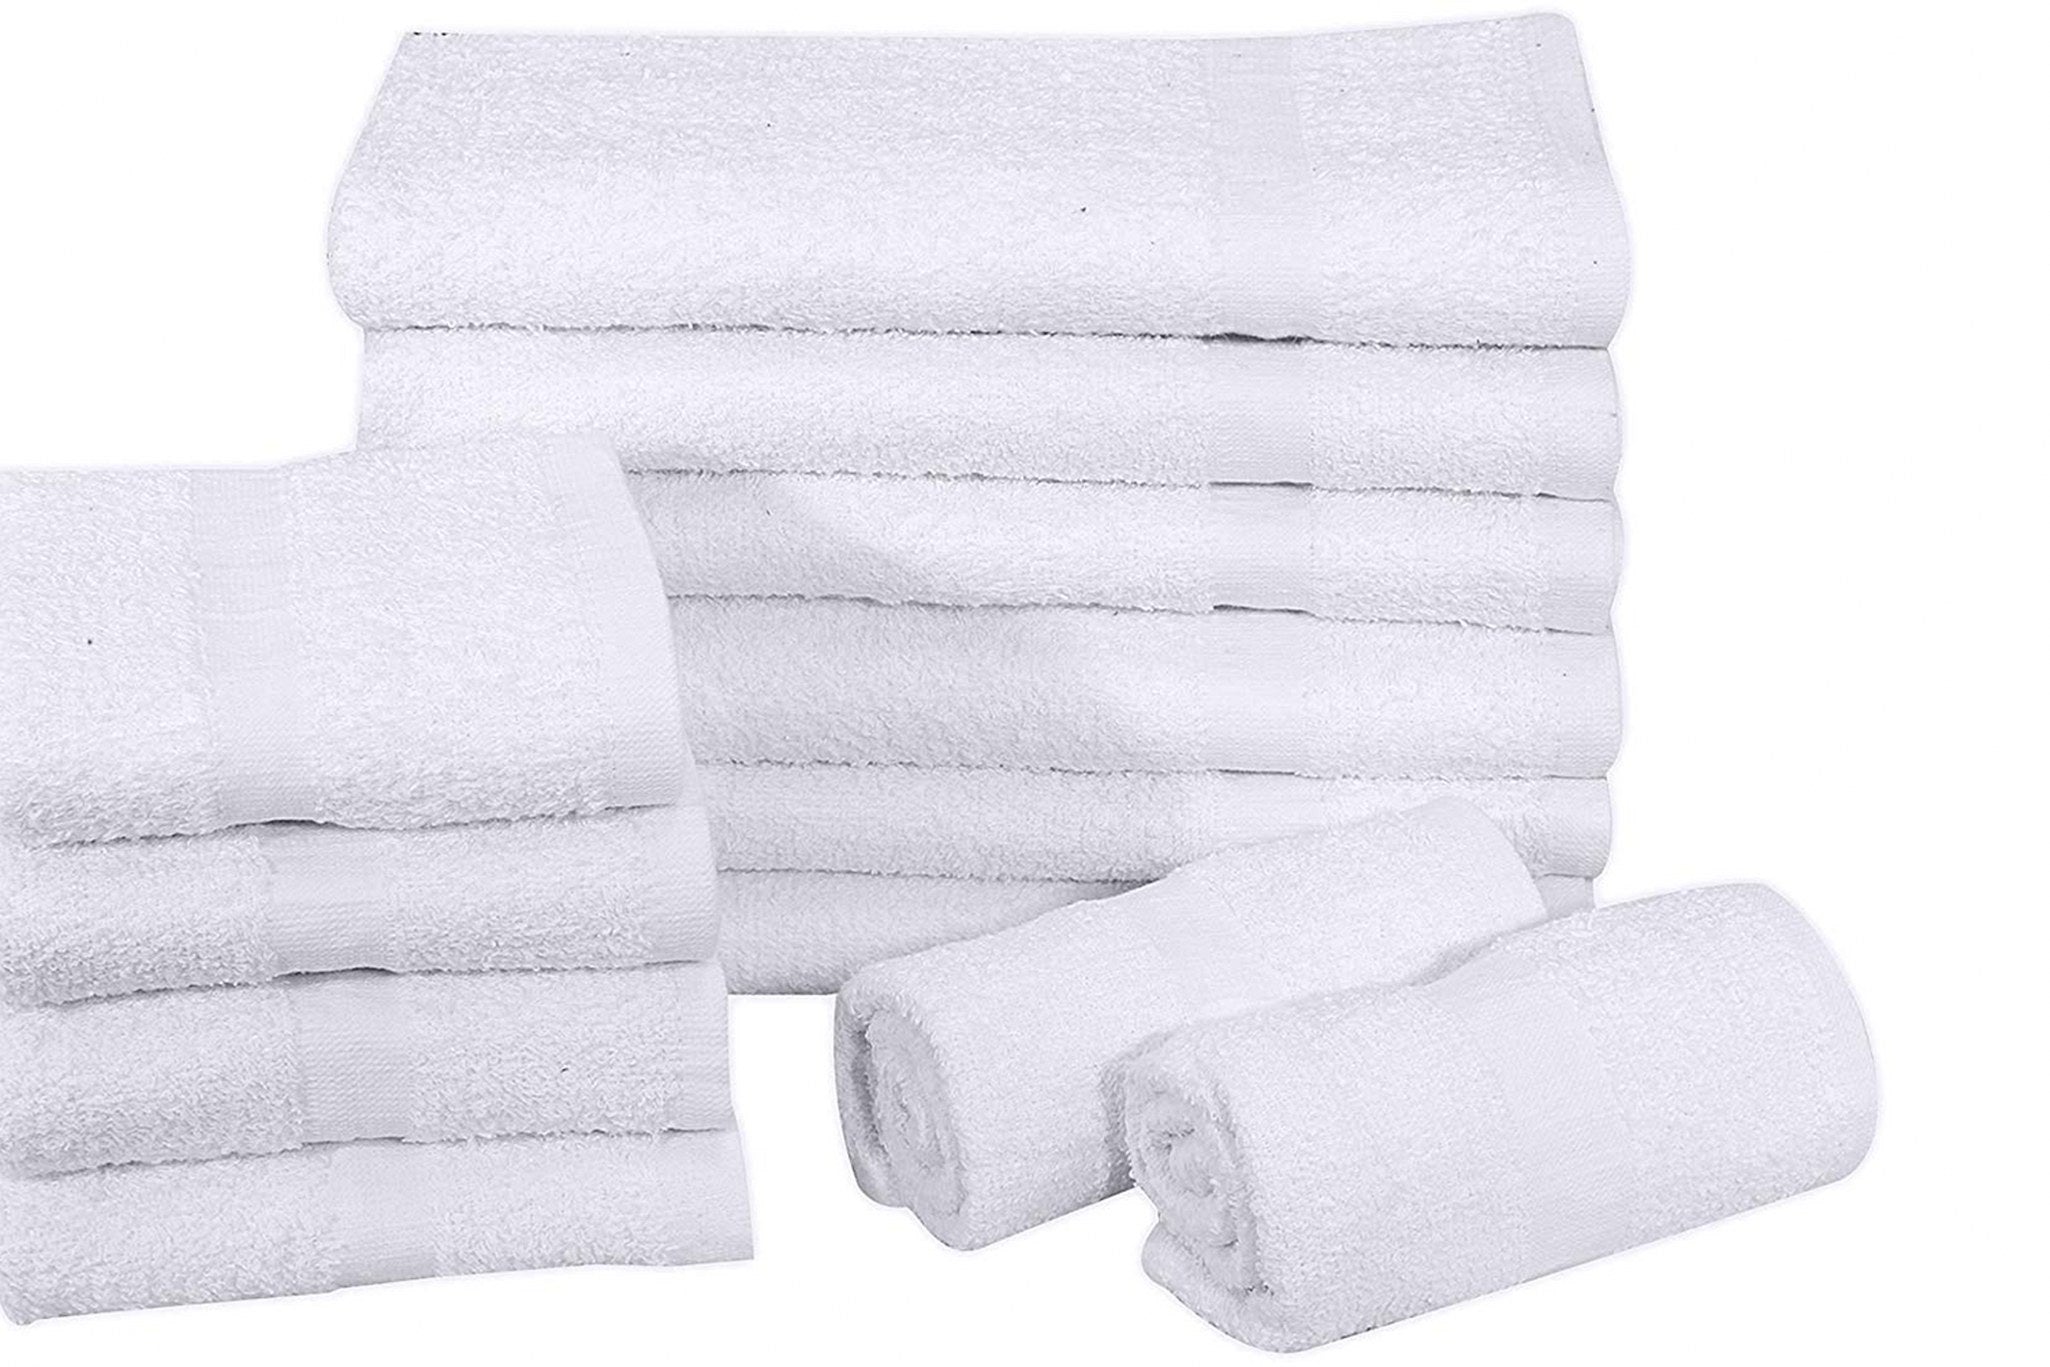 Bone White Cotton Hand Towels in Bulk